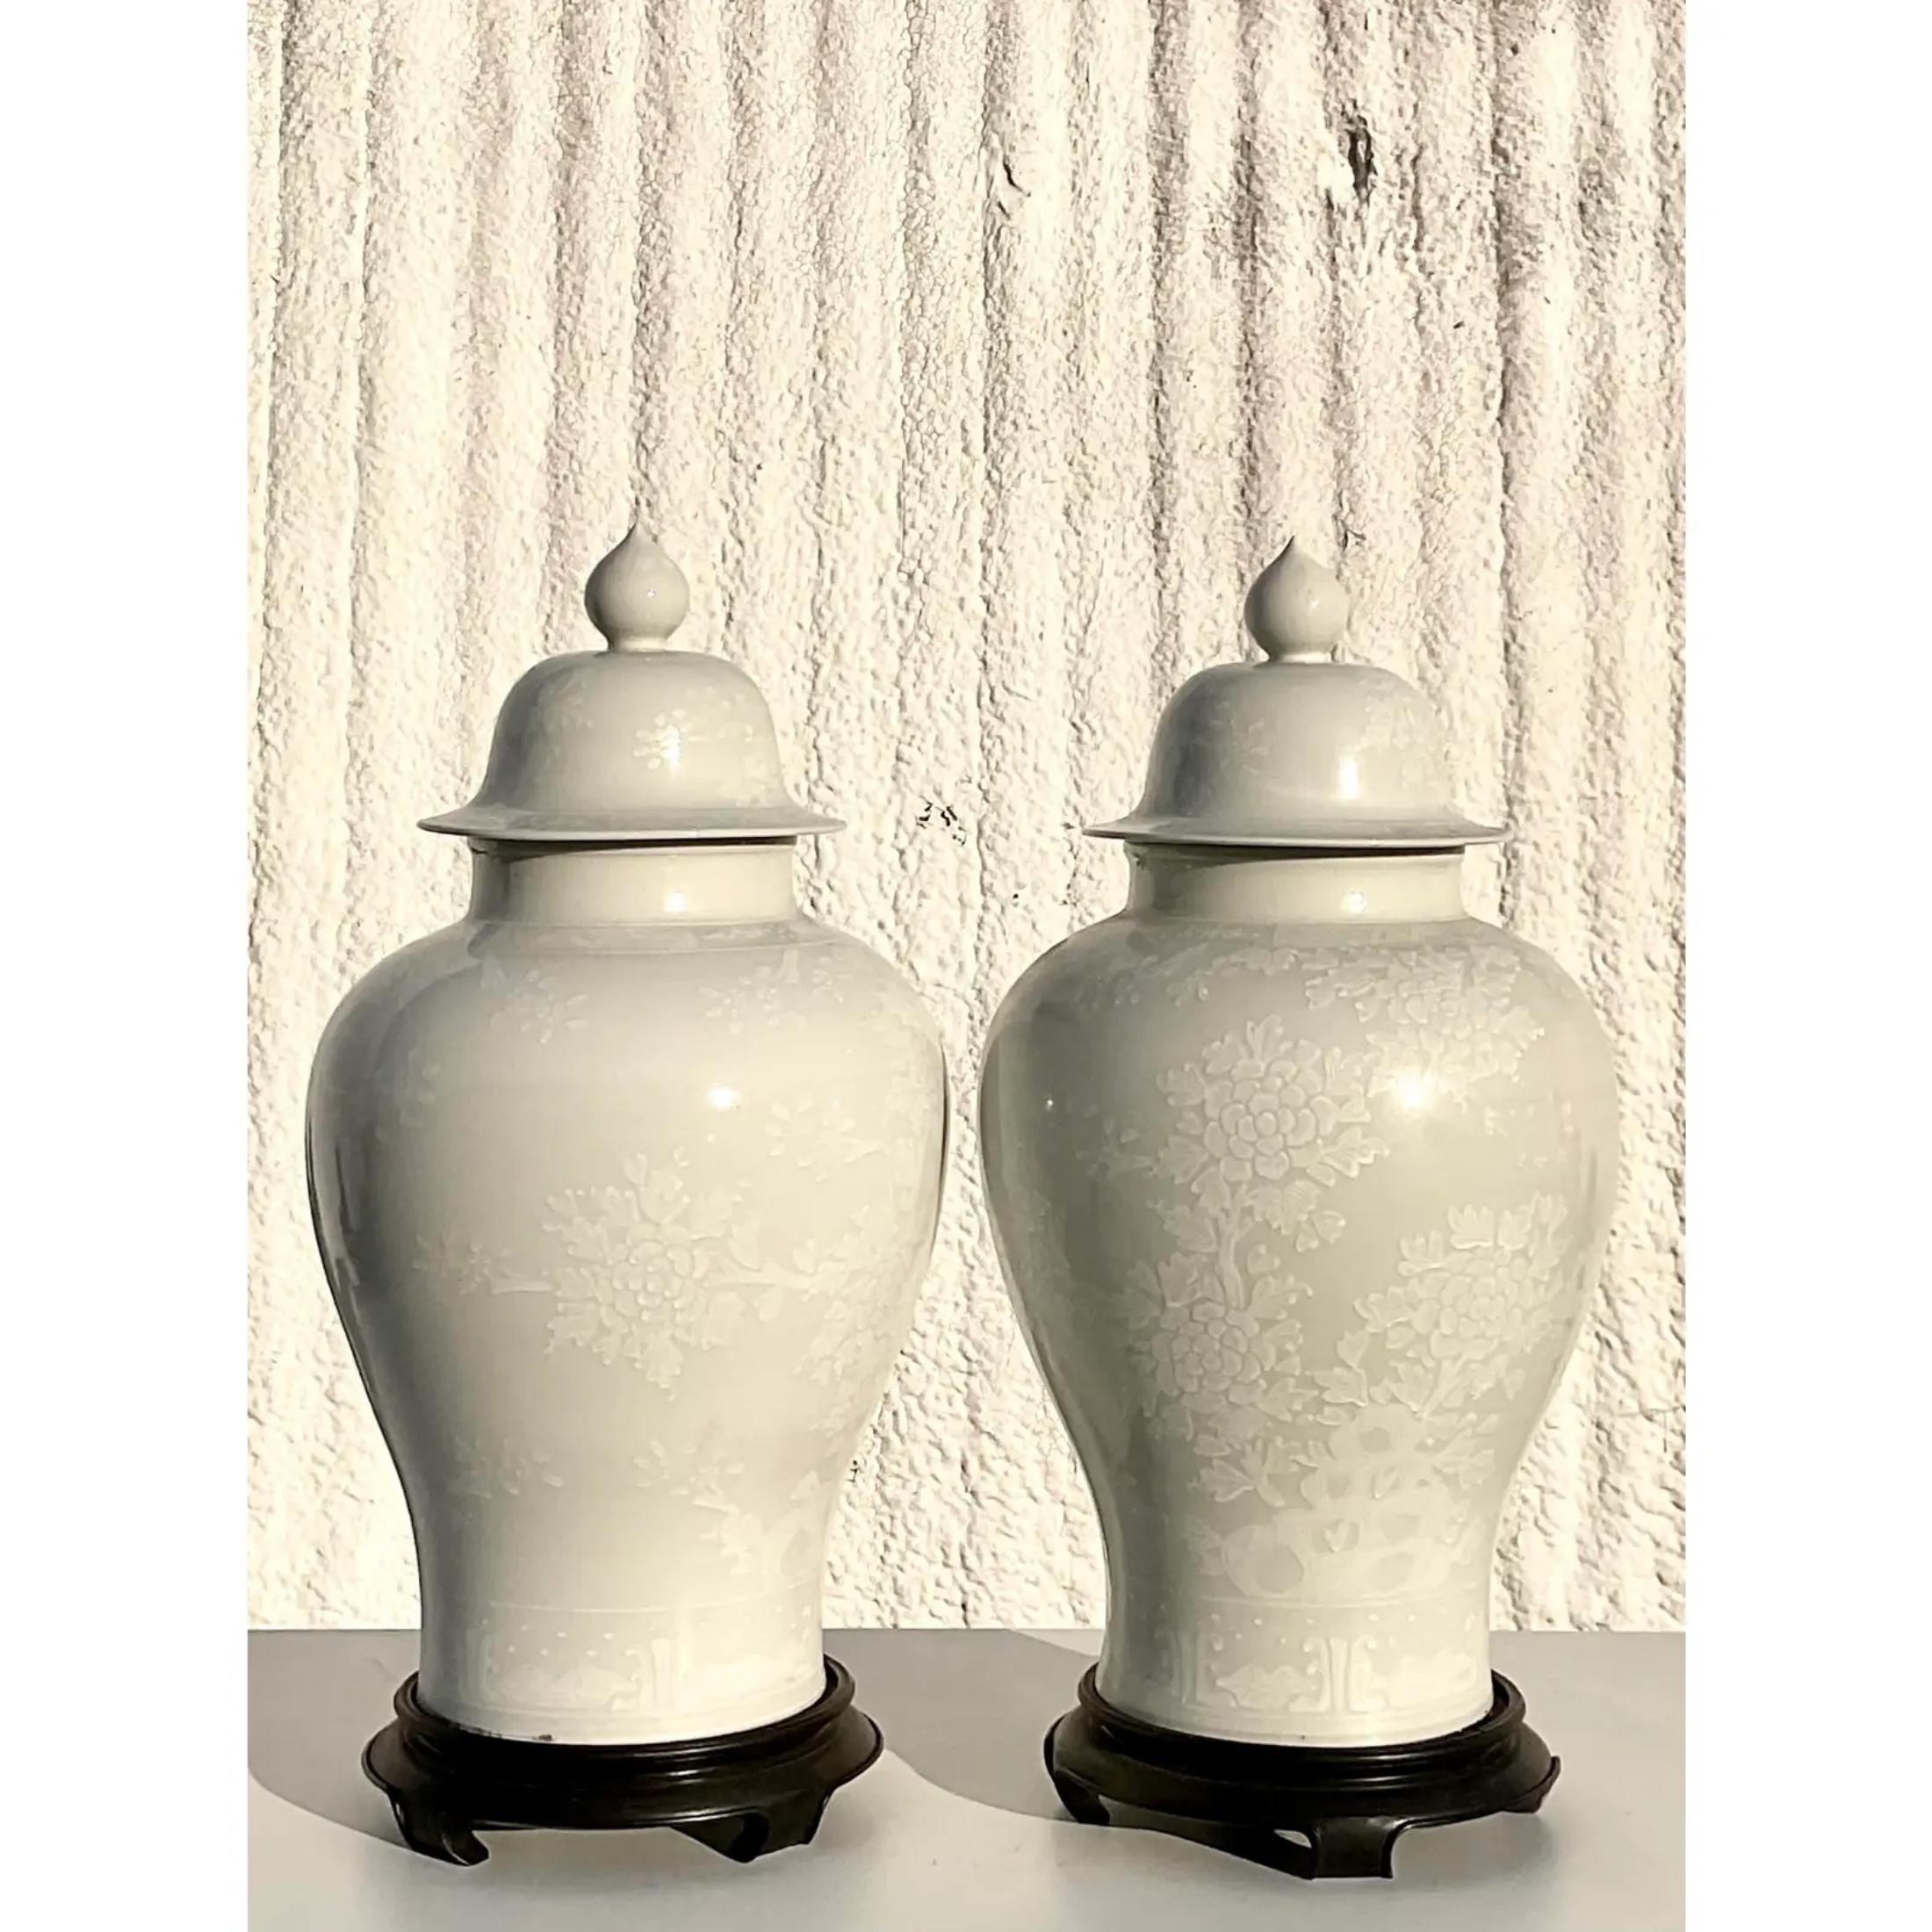 Vintage Asian Floral Ingwer Jar Urnen - ein Paar (Ebenholz) im Angebot